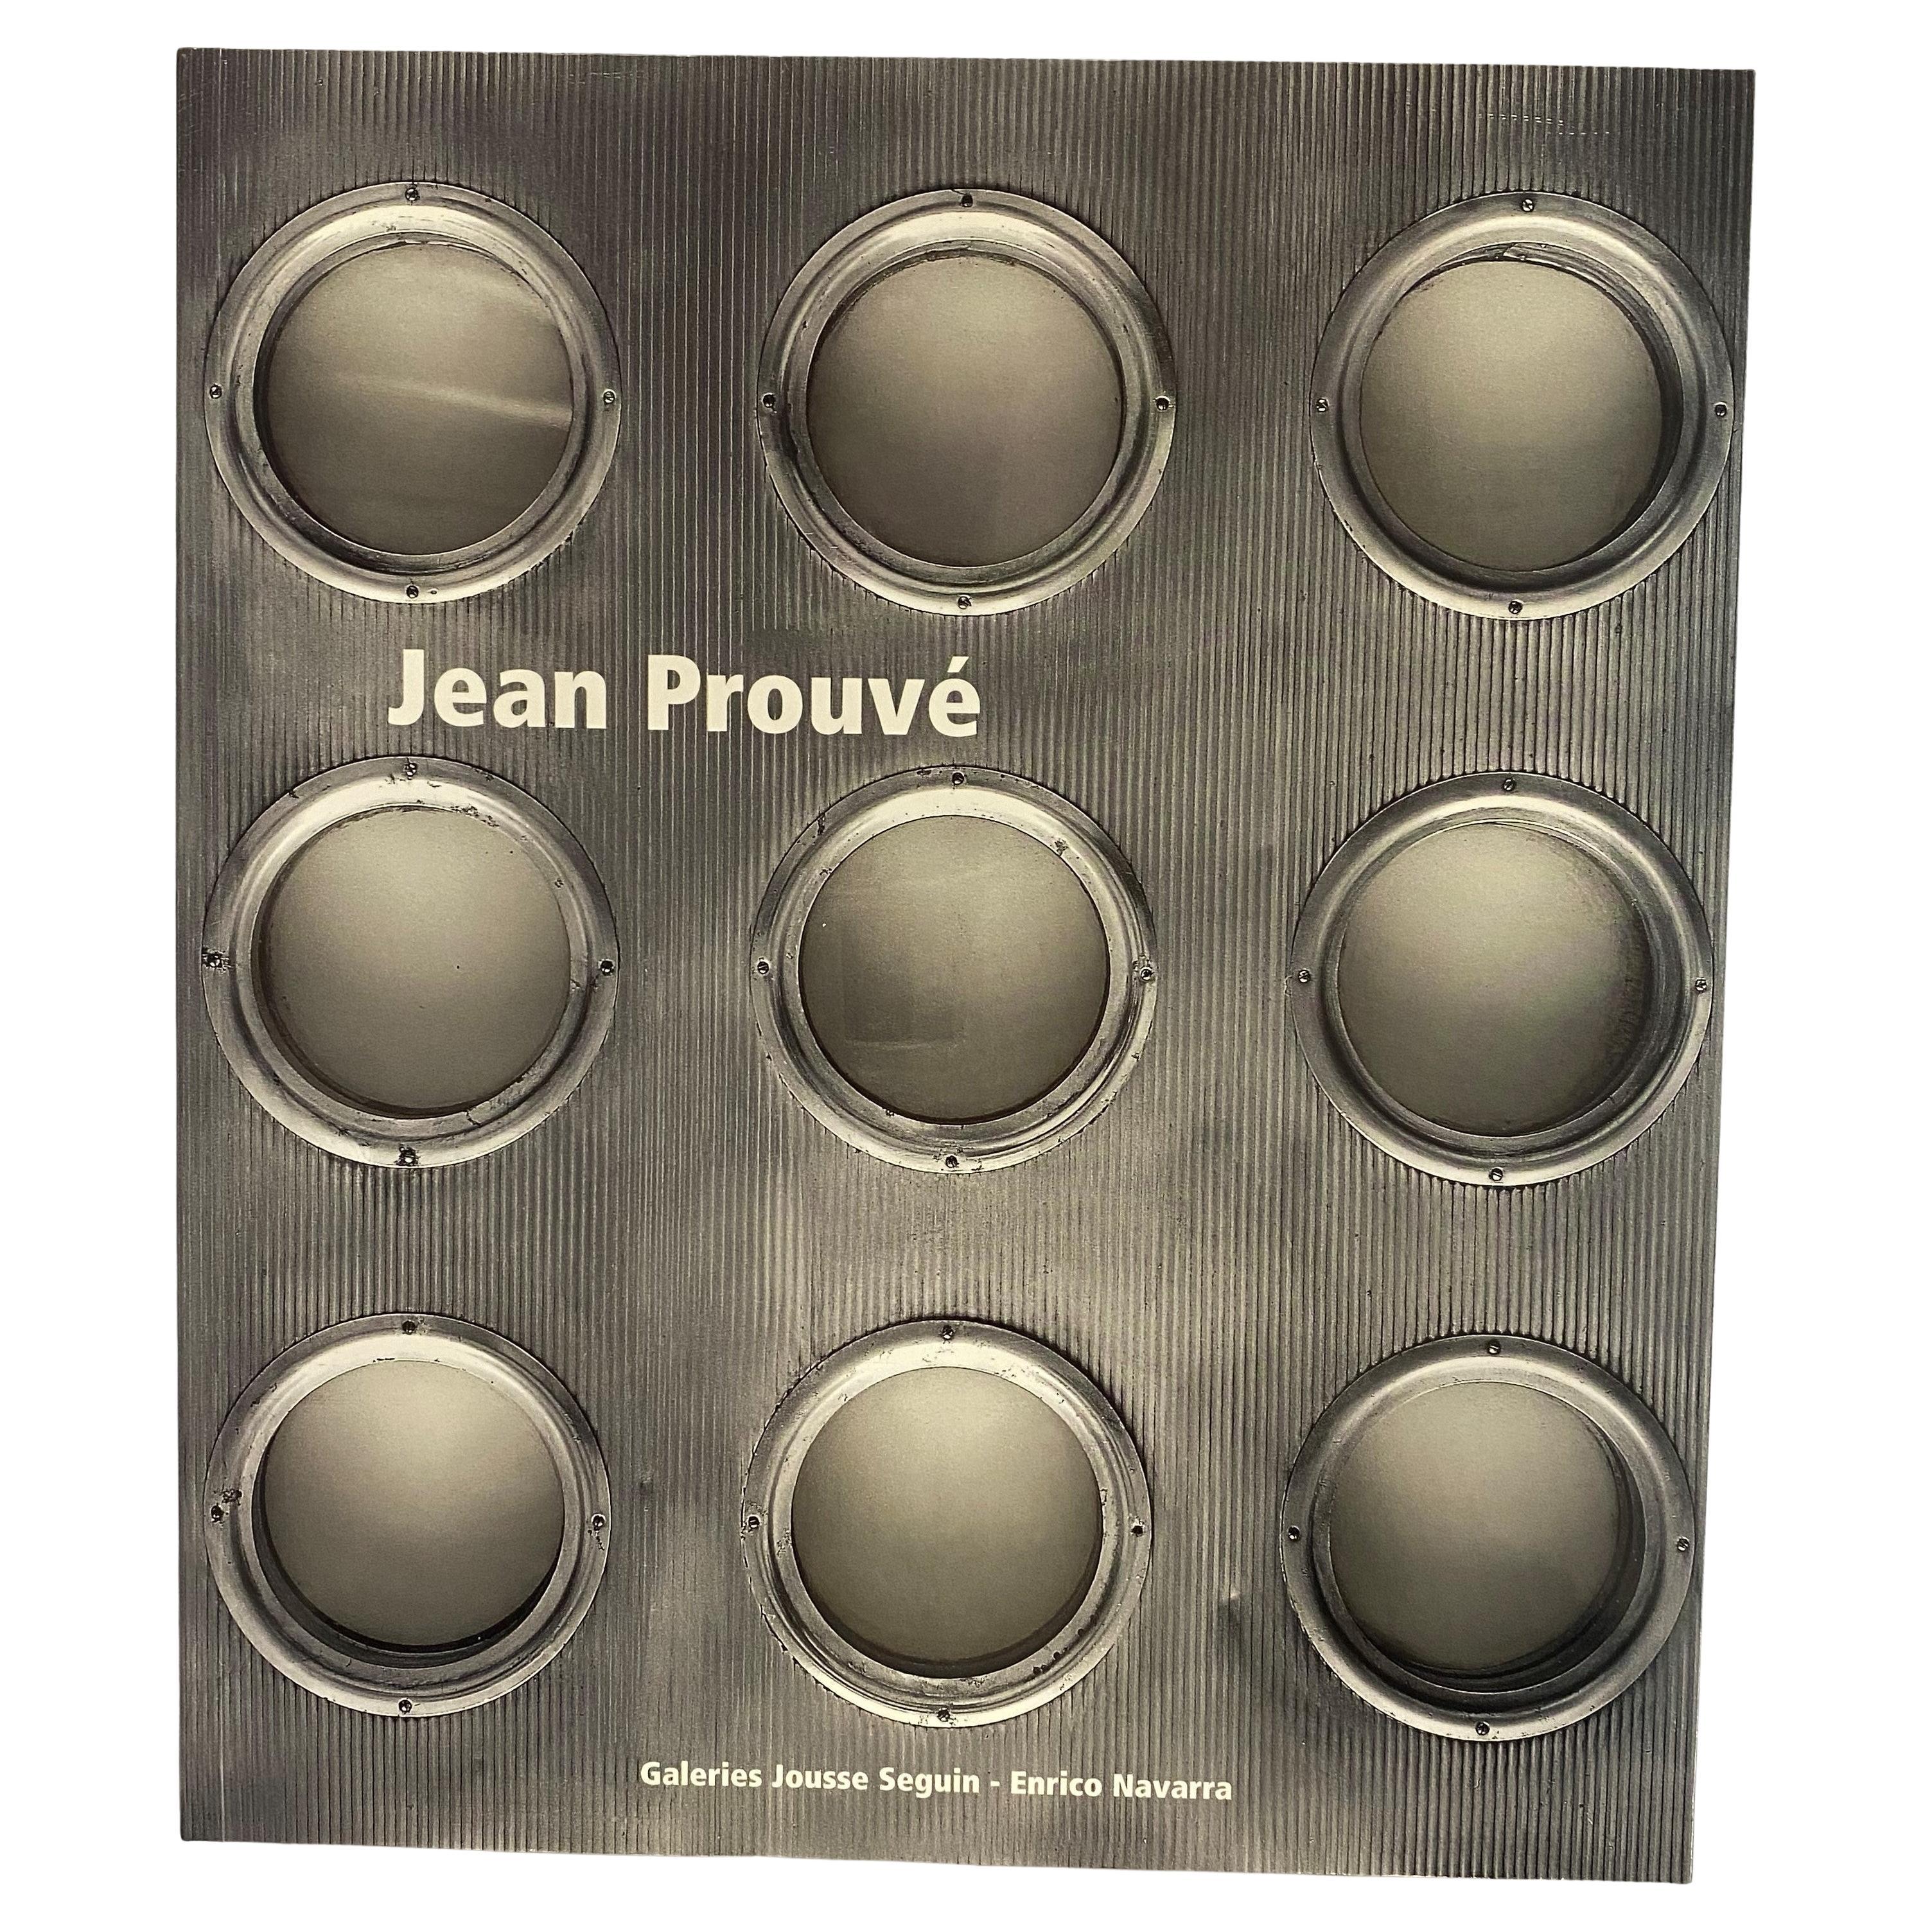 Jean Prouve by Enrico Navarra (Book) For Sale